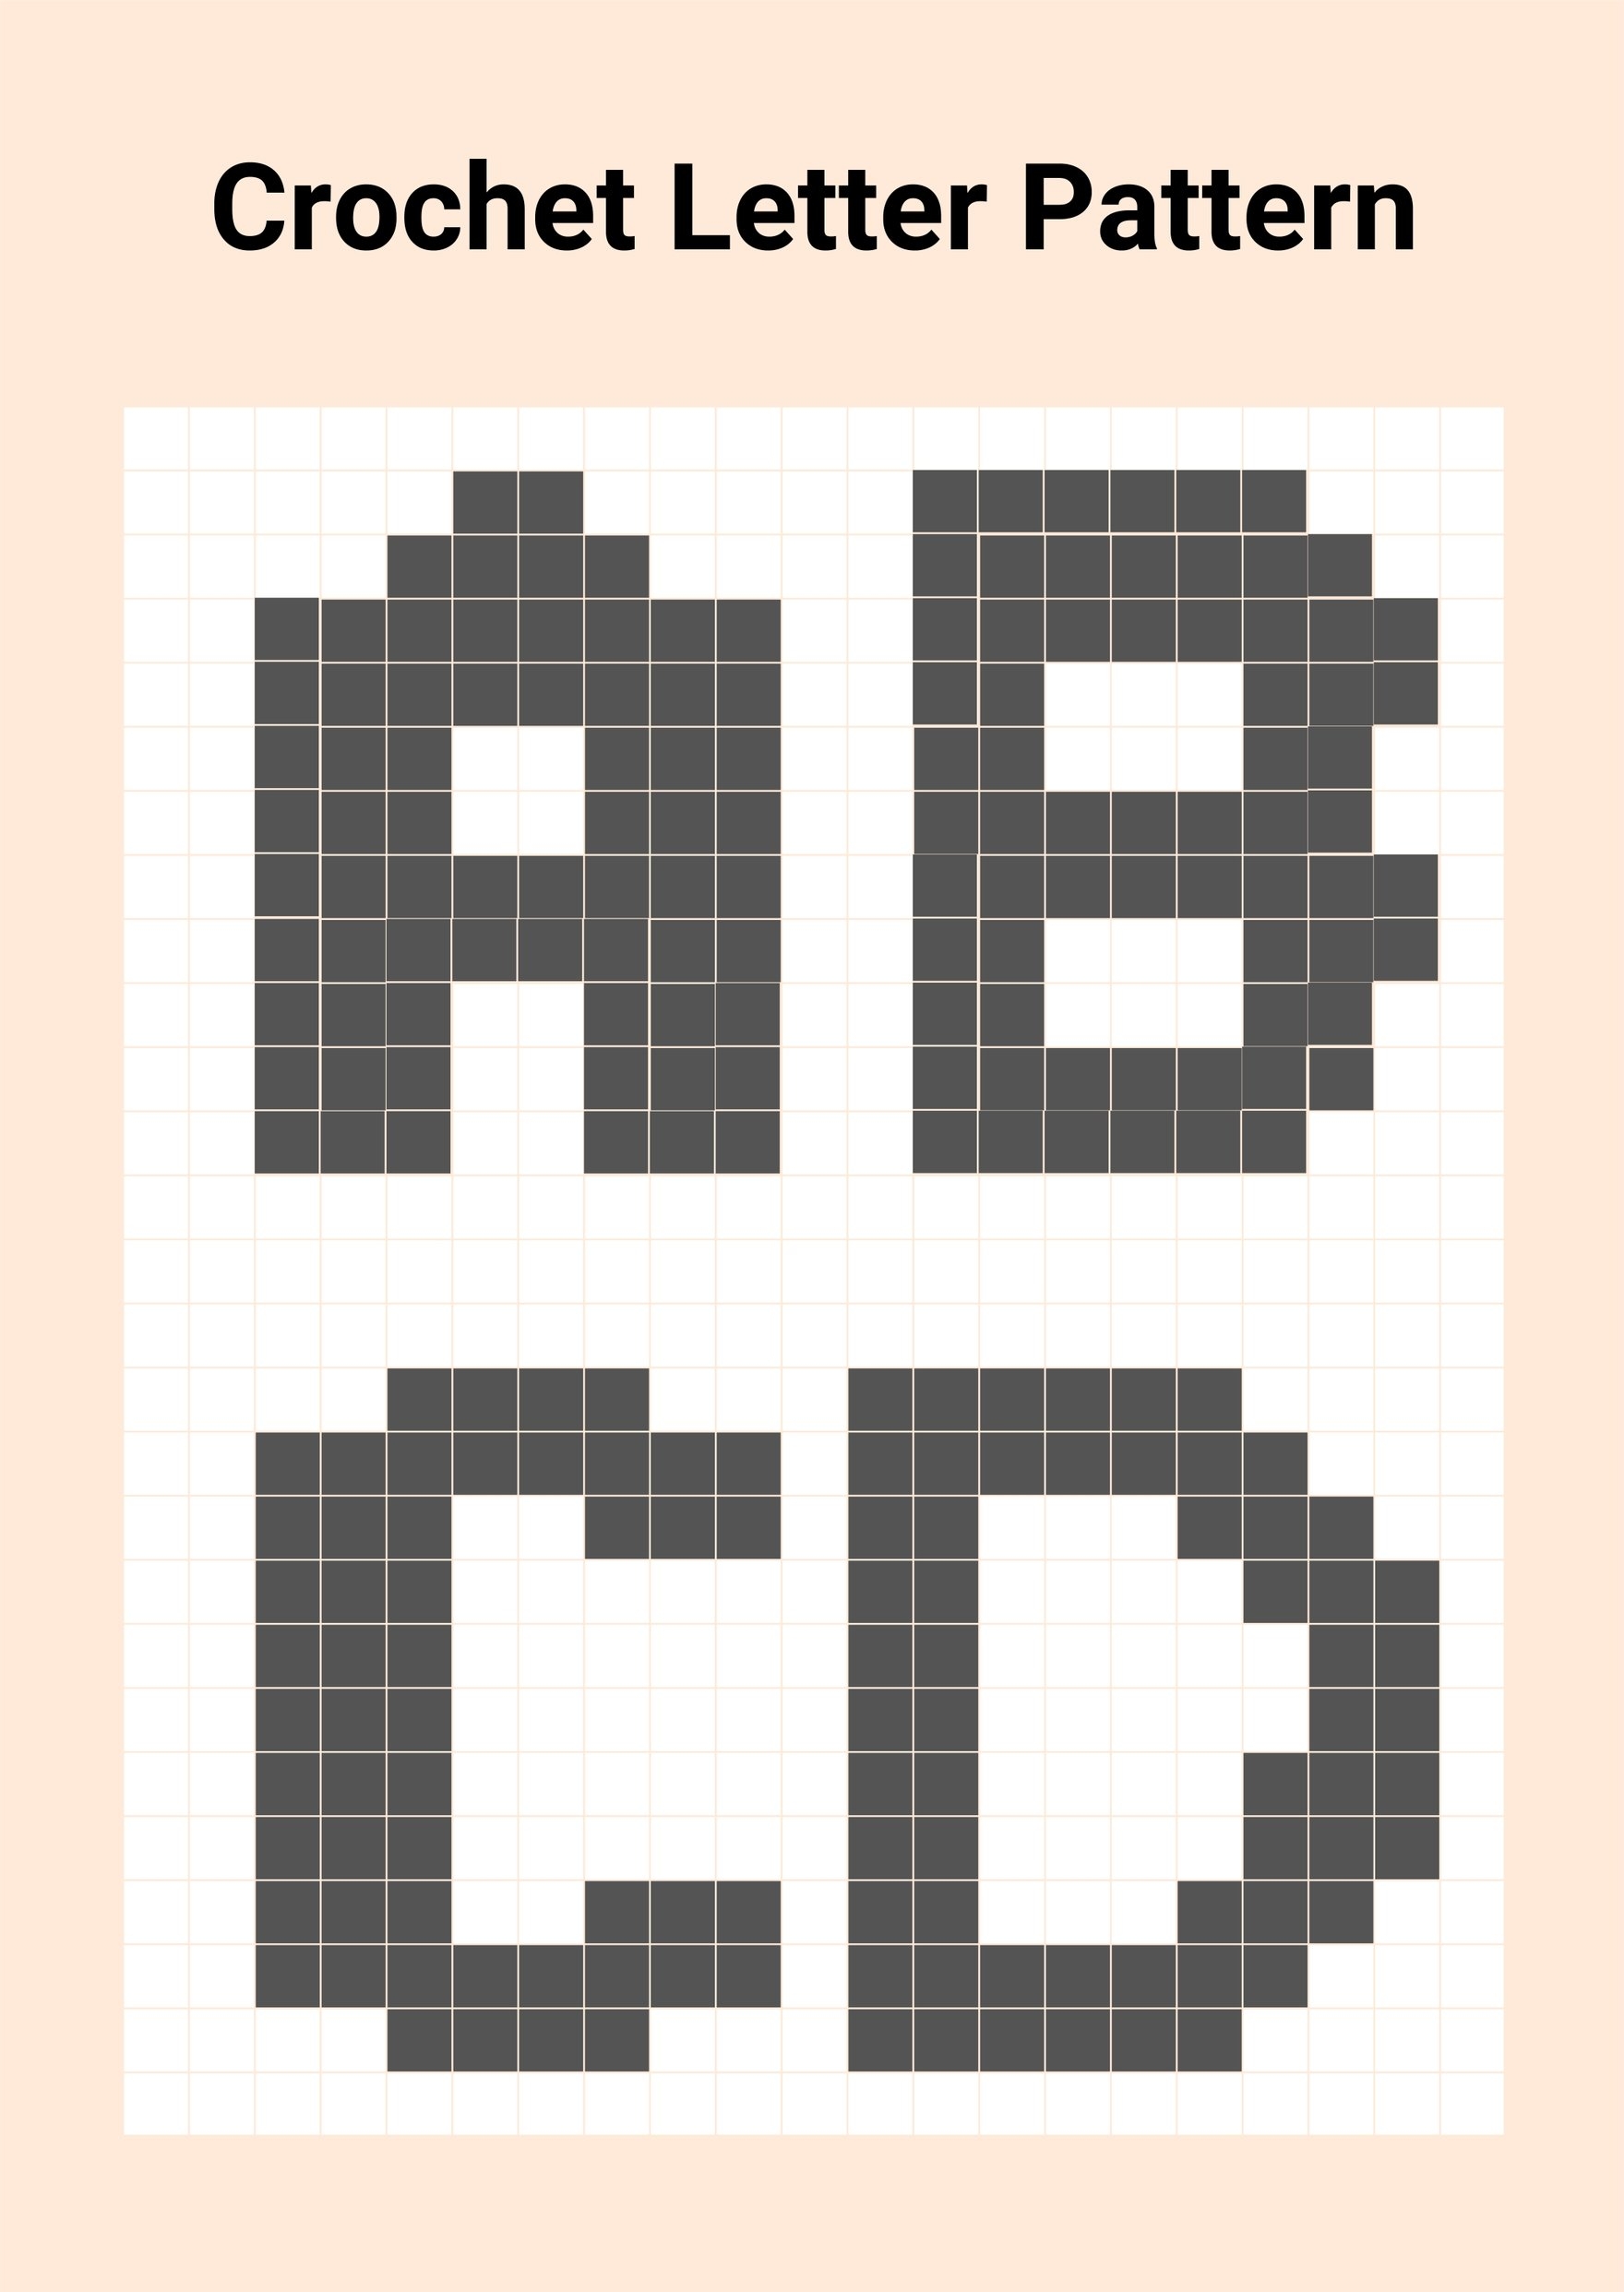 Crochet Letter Chart In Illustrator PDF Download Template